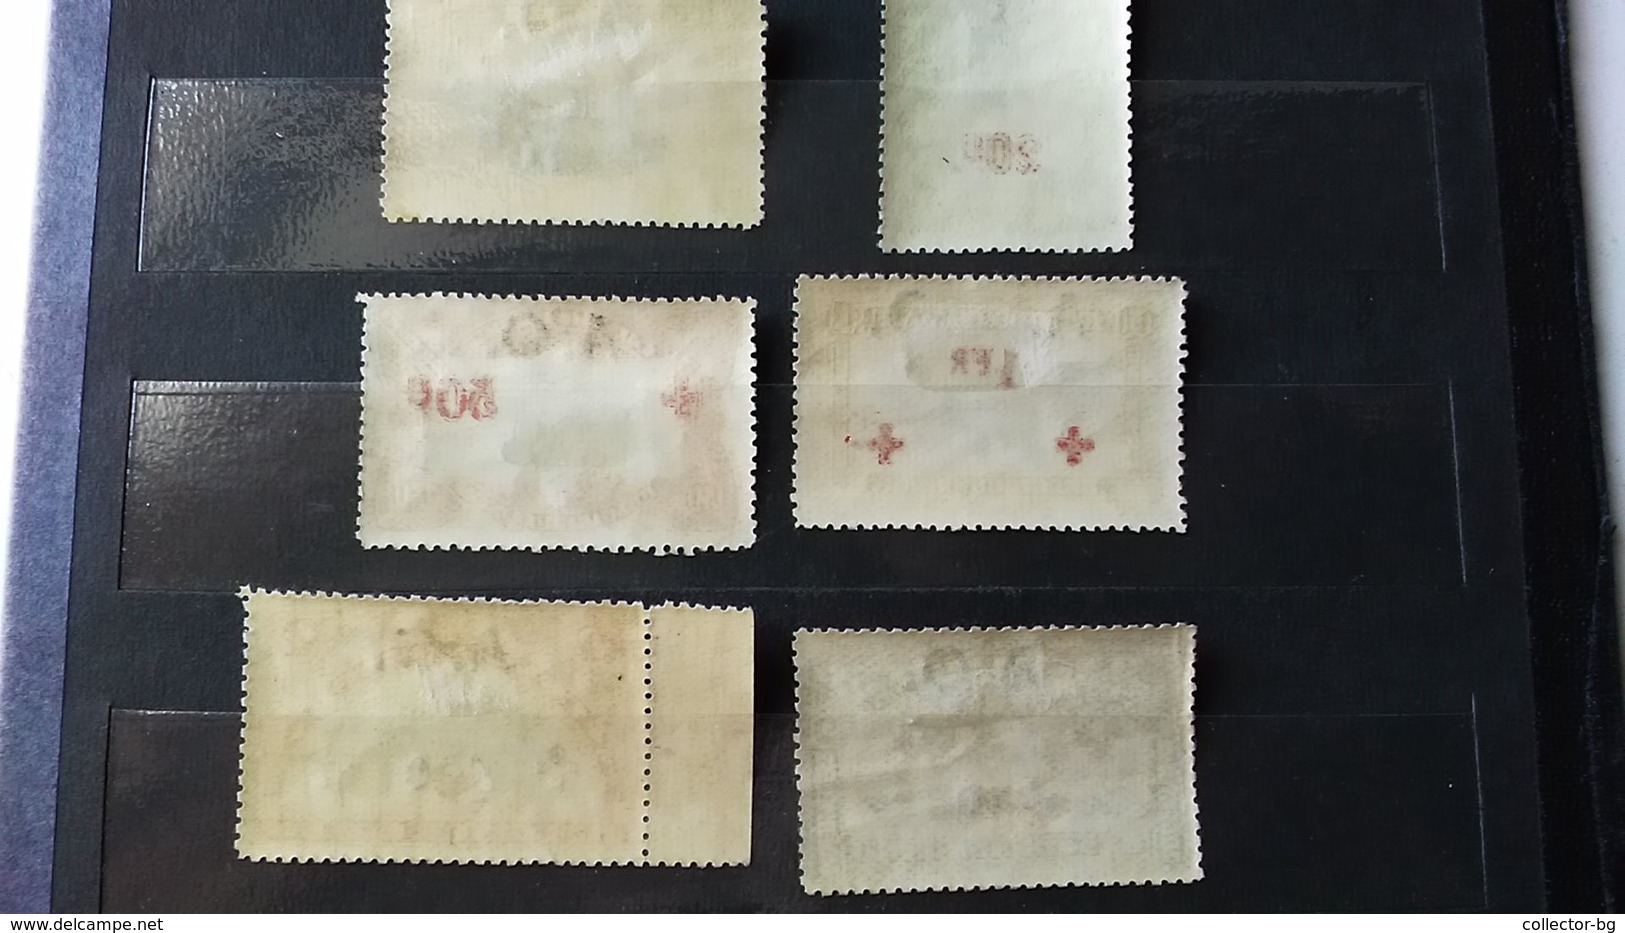 RARE BELGIAN BELGISH BELGIE CONGO 1918 OVERPRINT RED CROSS ORIGINAL GUM RARE UNUSED/MINT CV-350E STAMP TIMBRE - Unused Stamps